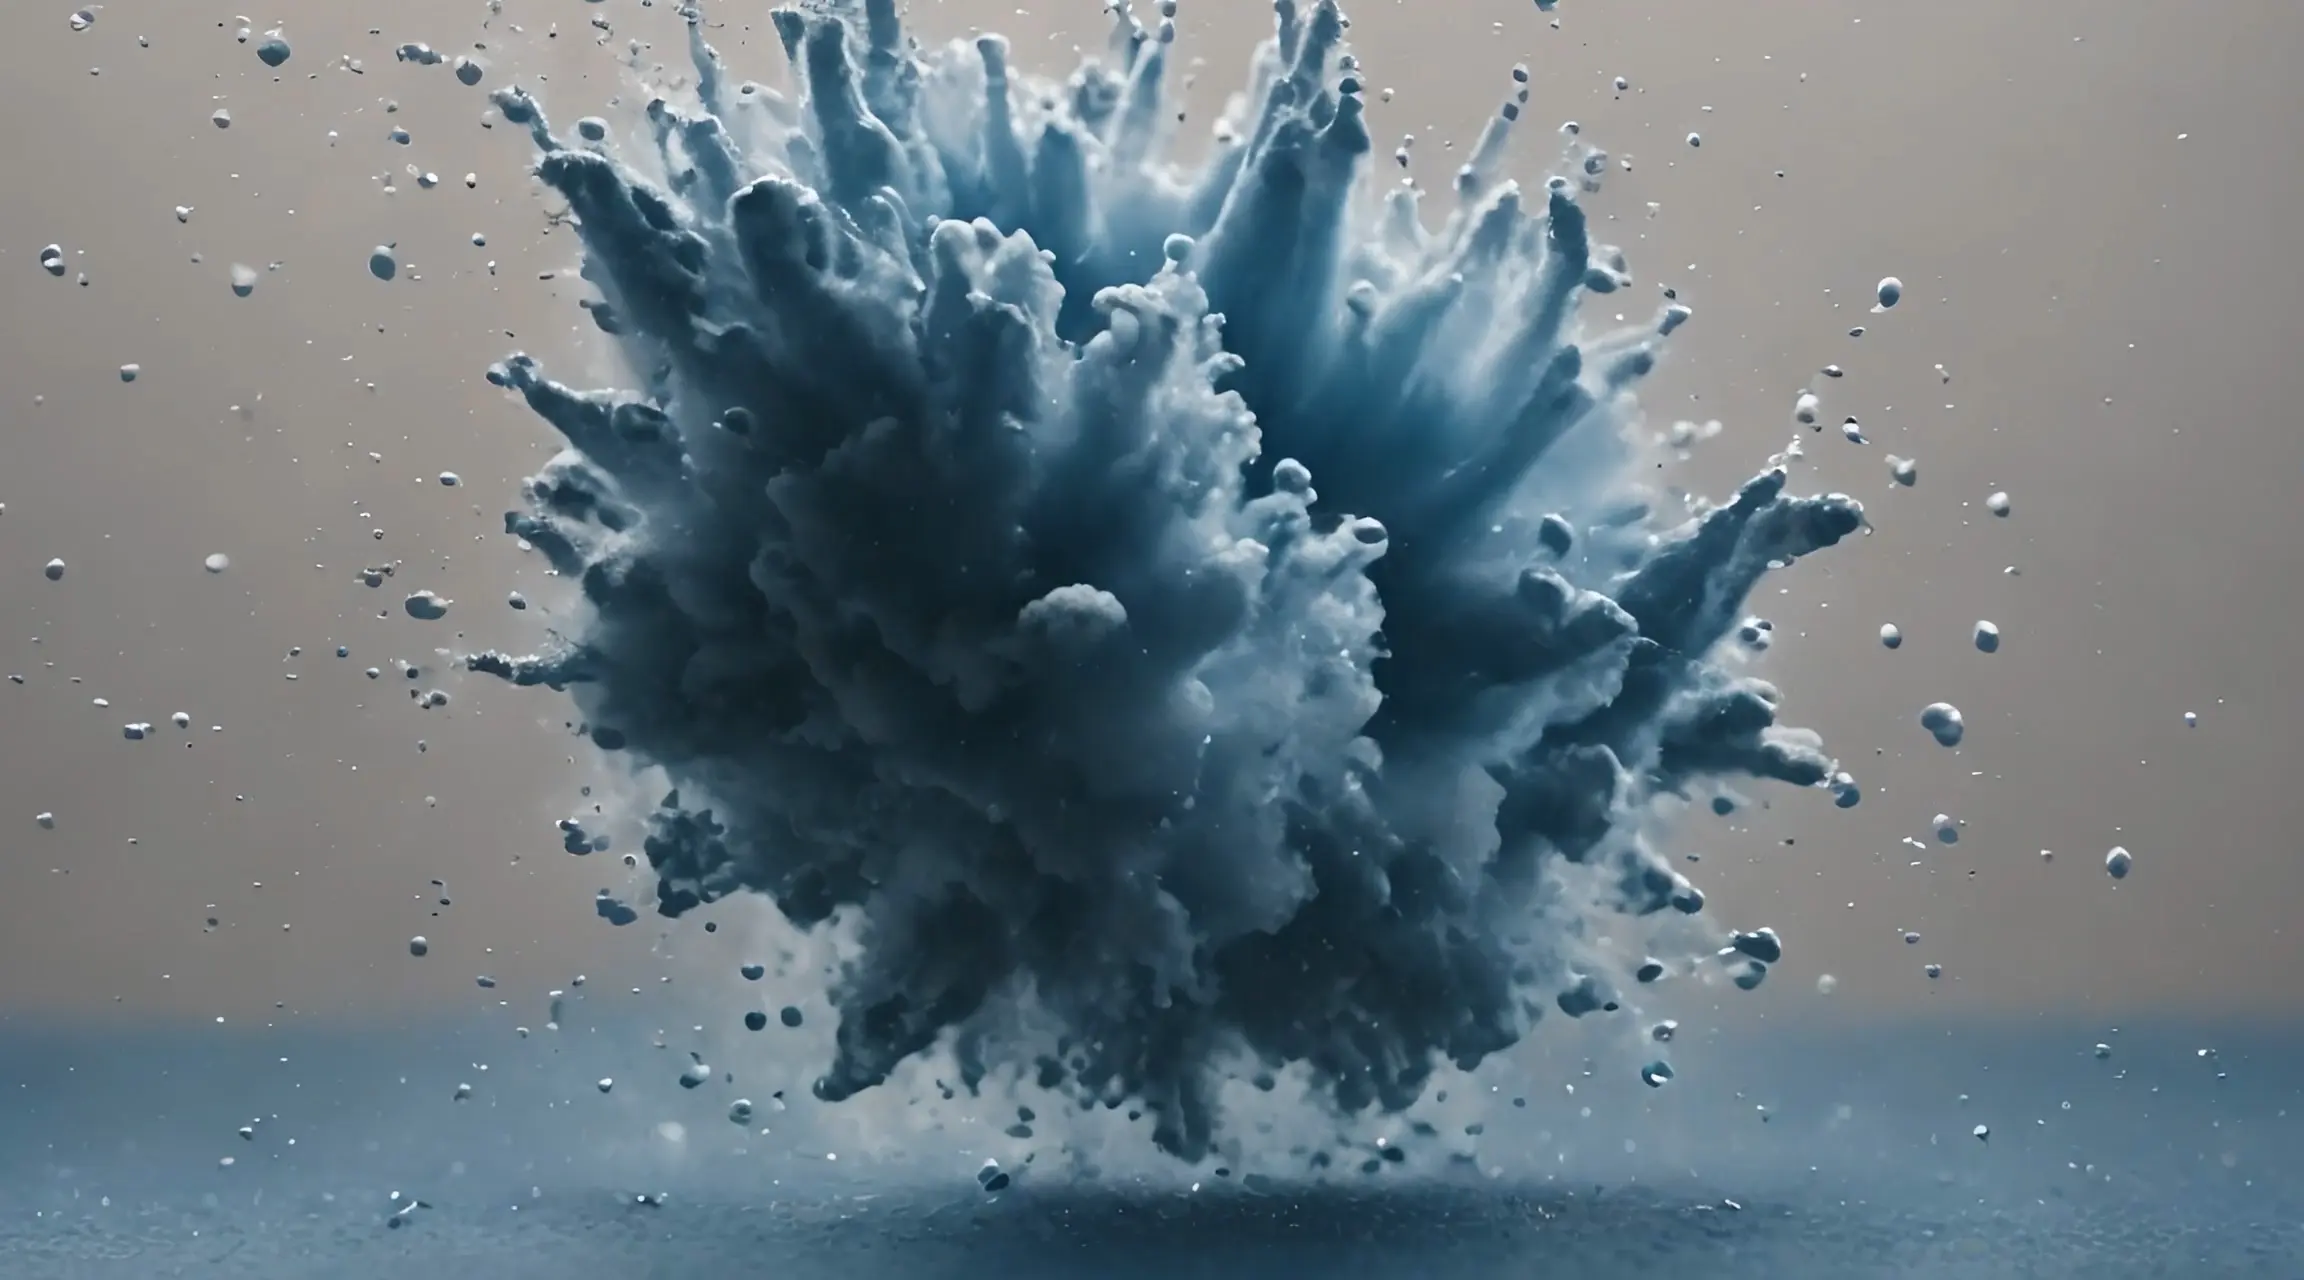 Underwater Burst Dynamic Water Explosion Stock Video